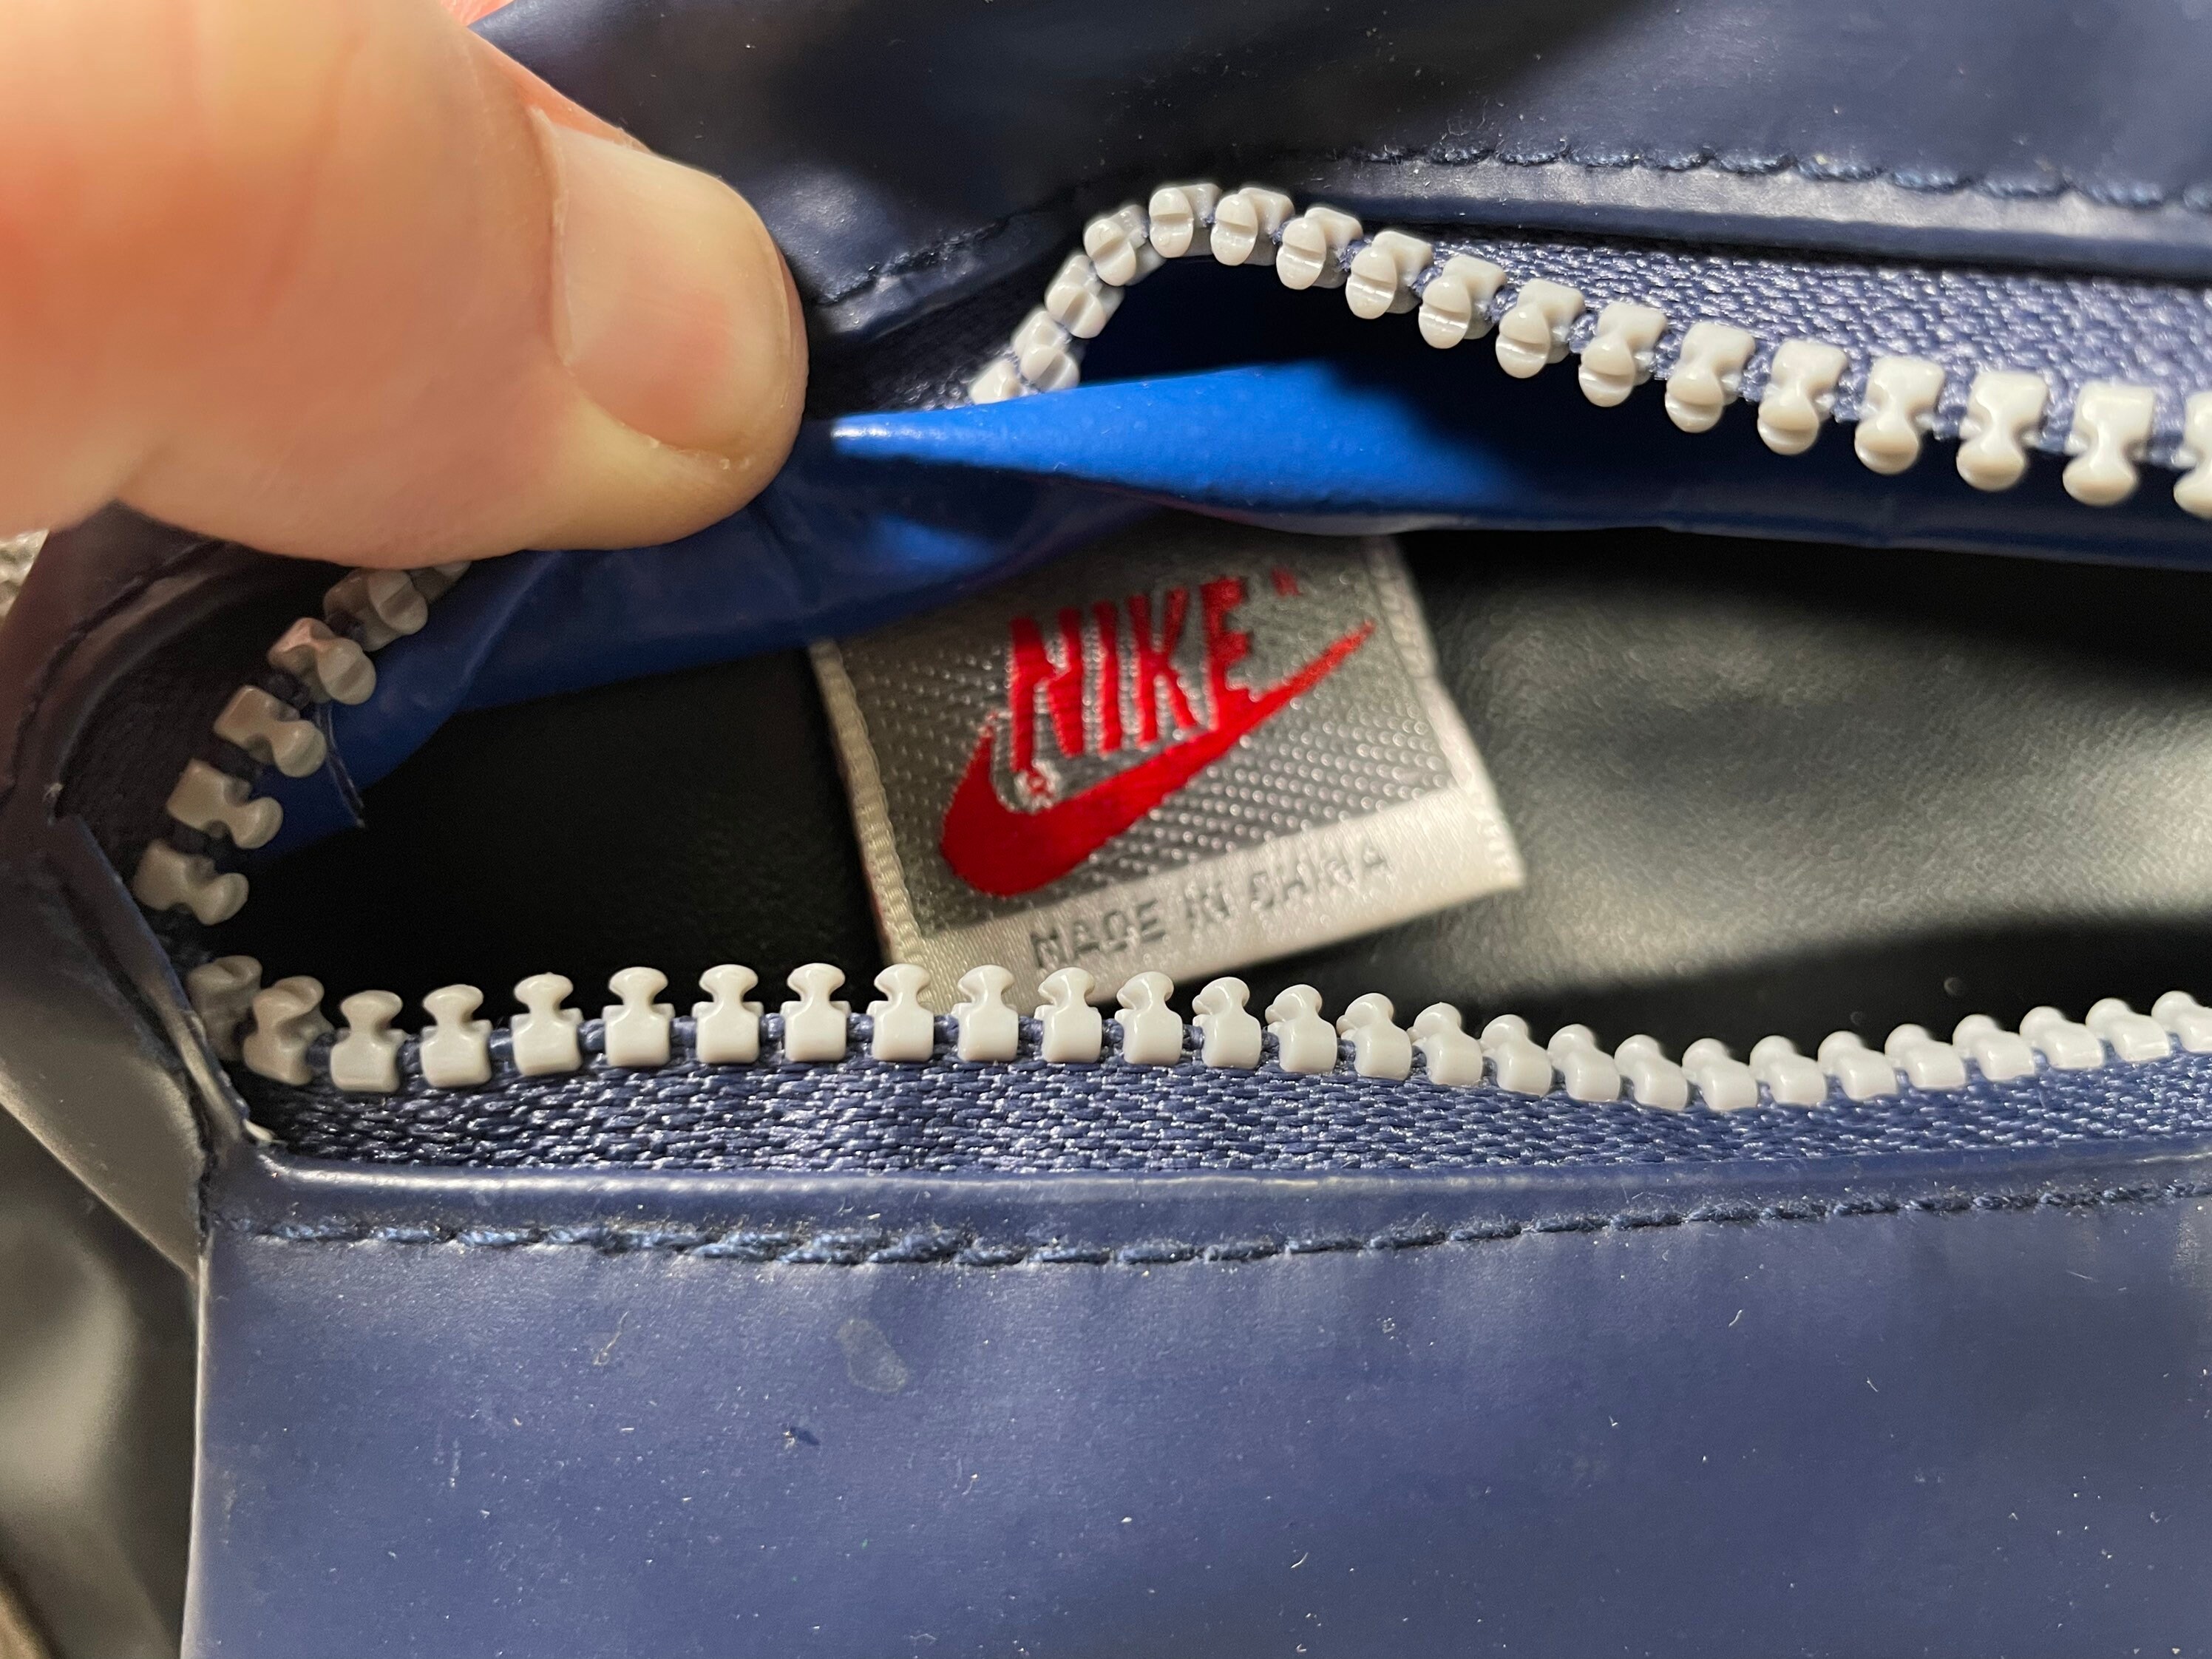 Vintage Nike Fanny Pack Blue Vinyl Grey Tag Waist Lumbar Bag 